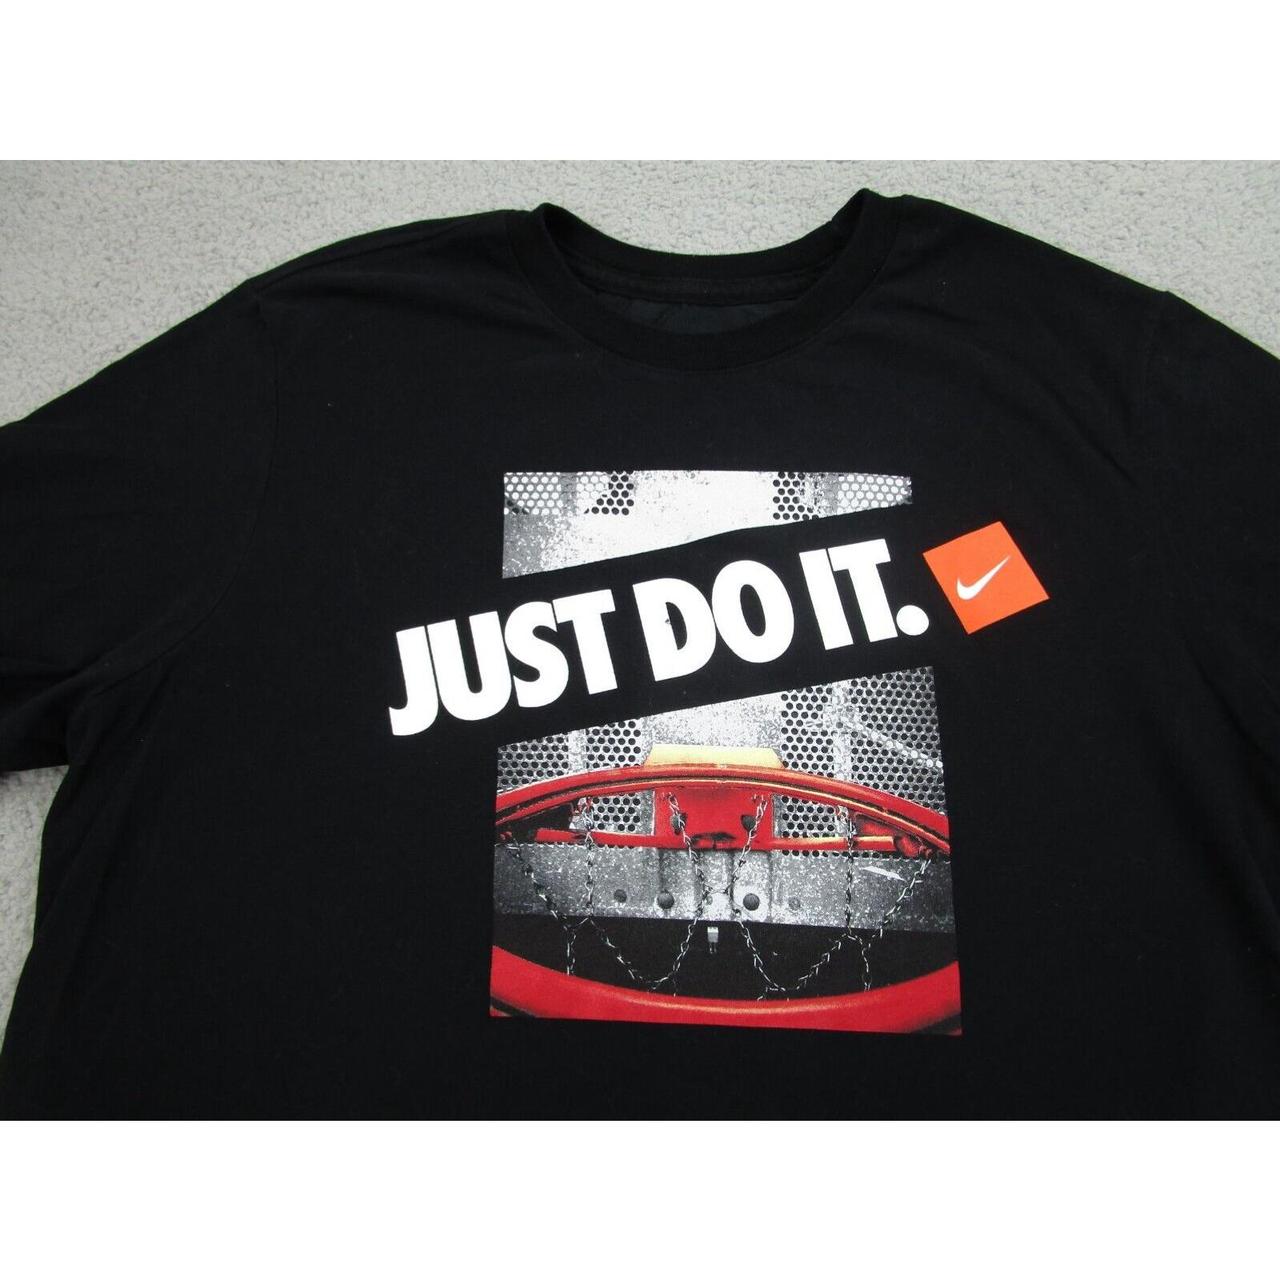 Nike Basketball just do it logo t-shirt in black